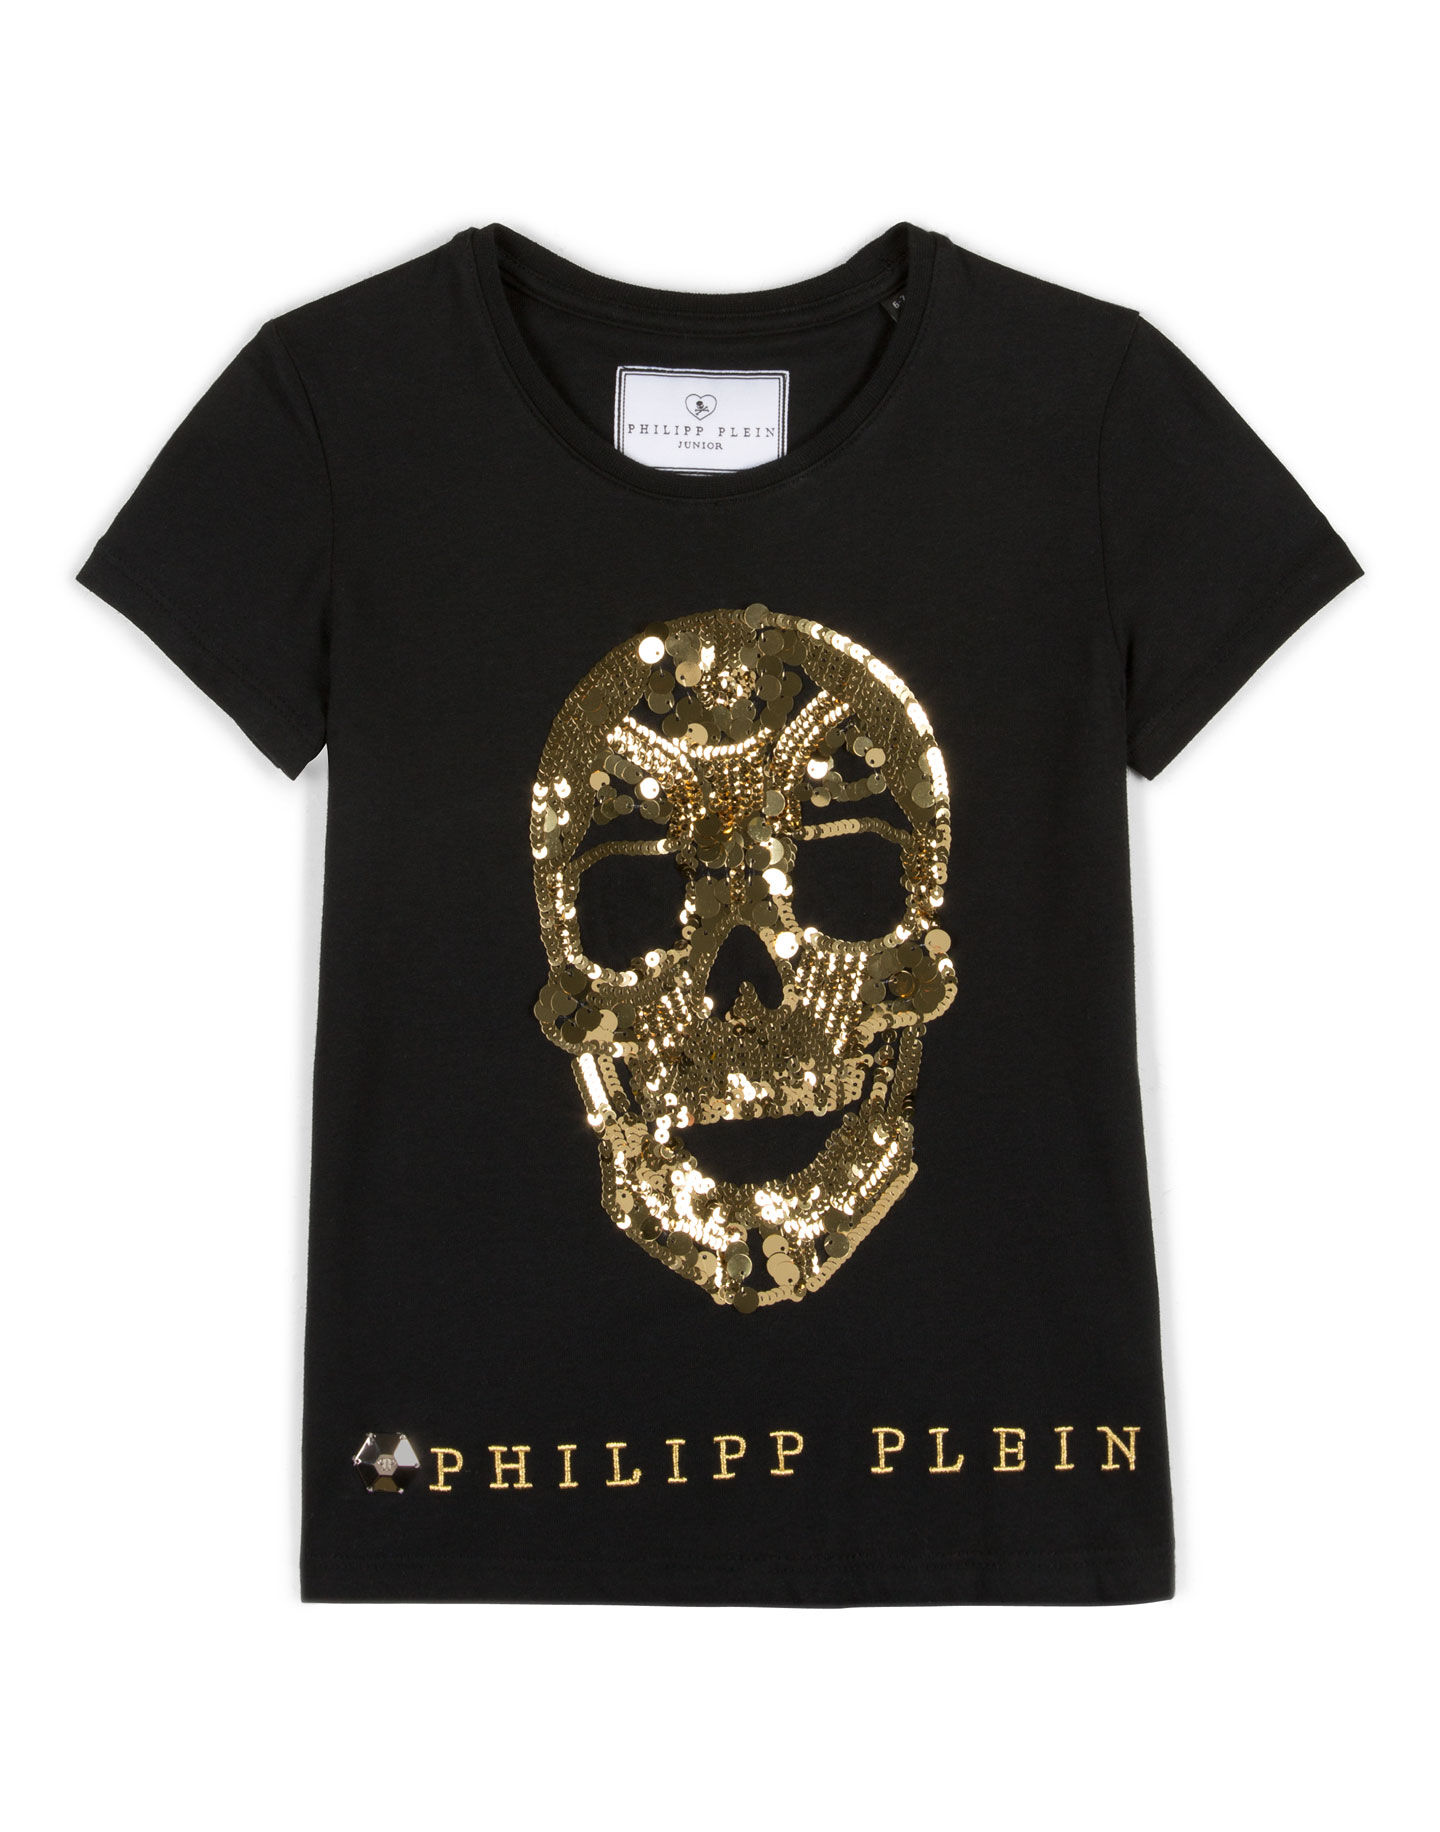 Philipp Plein Glitter Shirt Deals - deportesinc.com 1688455607